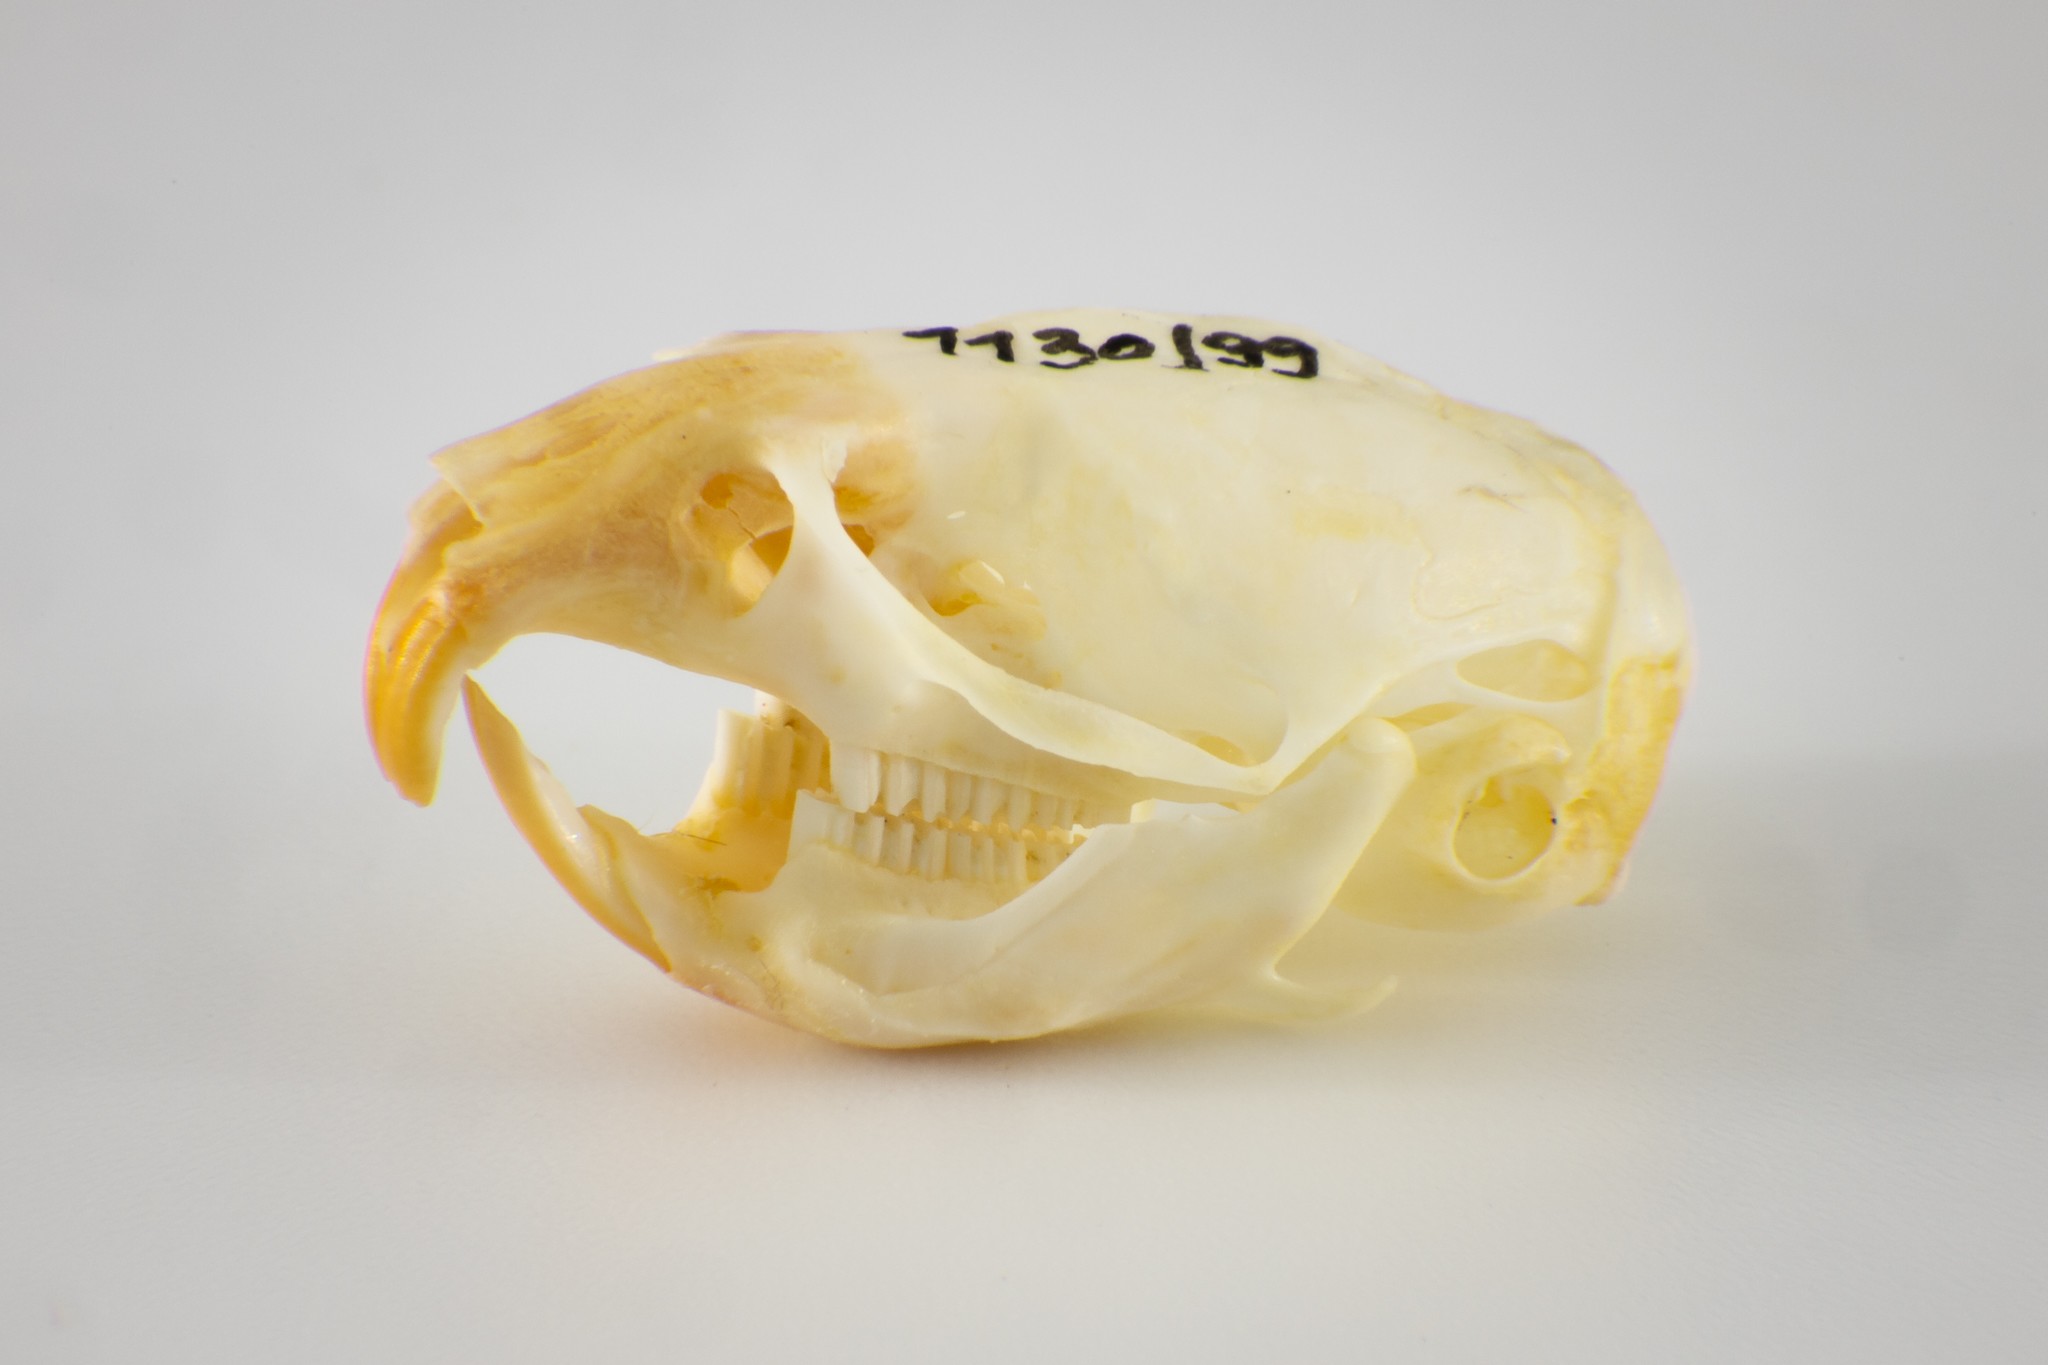 Feldmaus (Microtus arvalis) (Museum der Westlausitz Kamenz CC BY-SA)